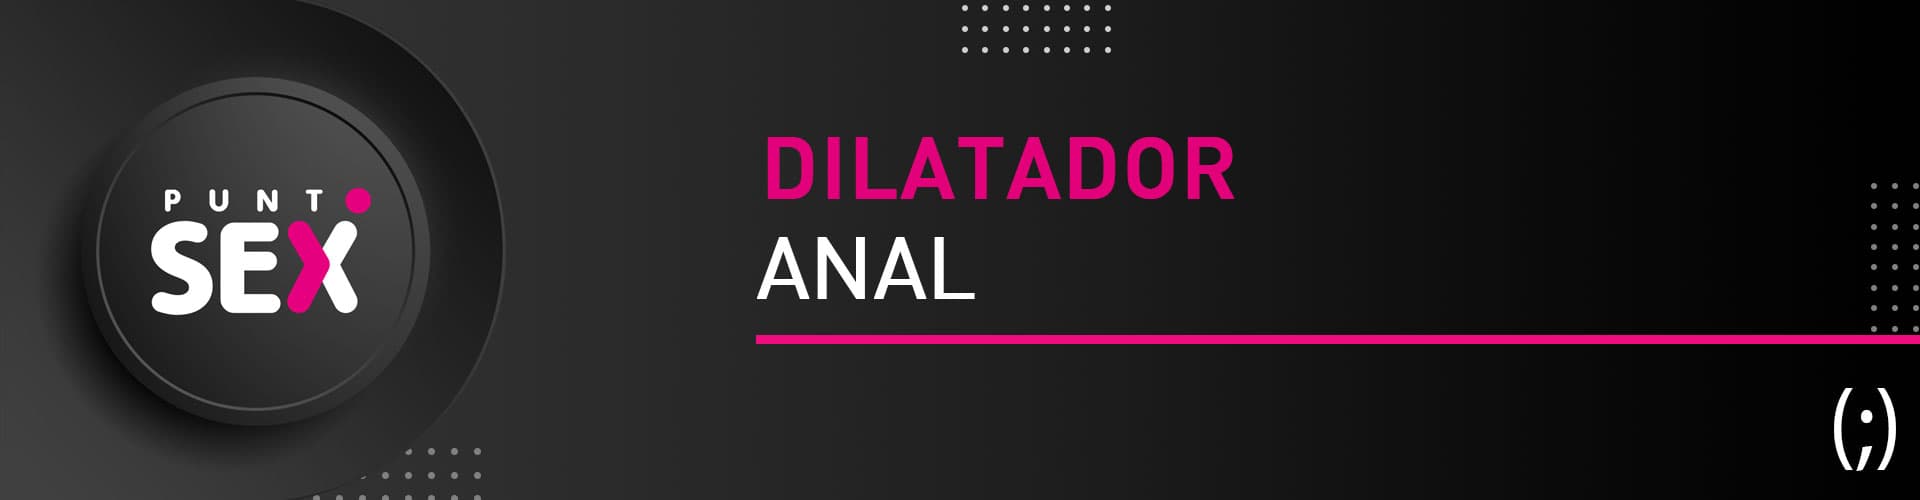 Dilatador Anal